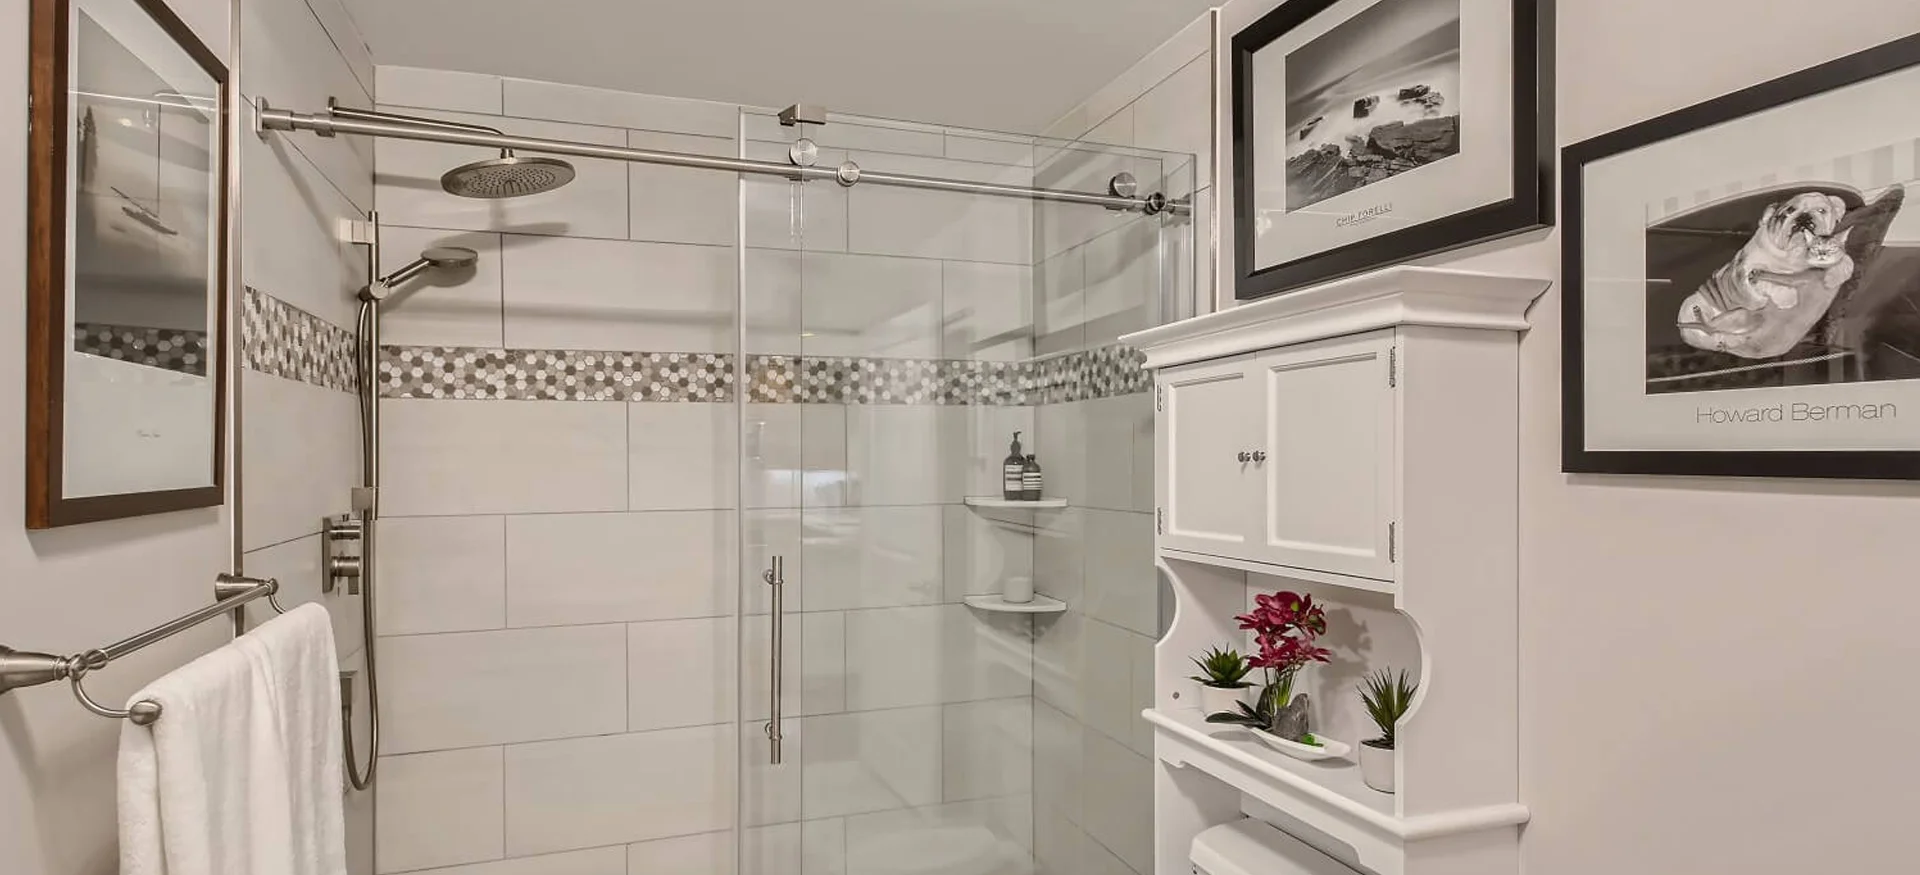 Shower or Bathroom Glass